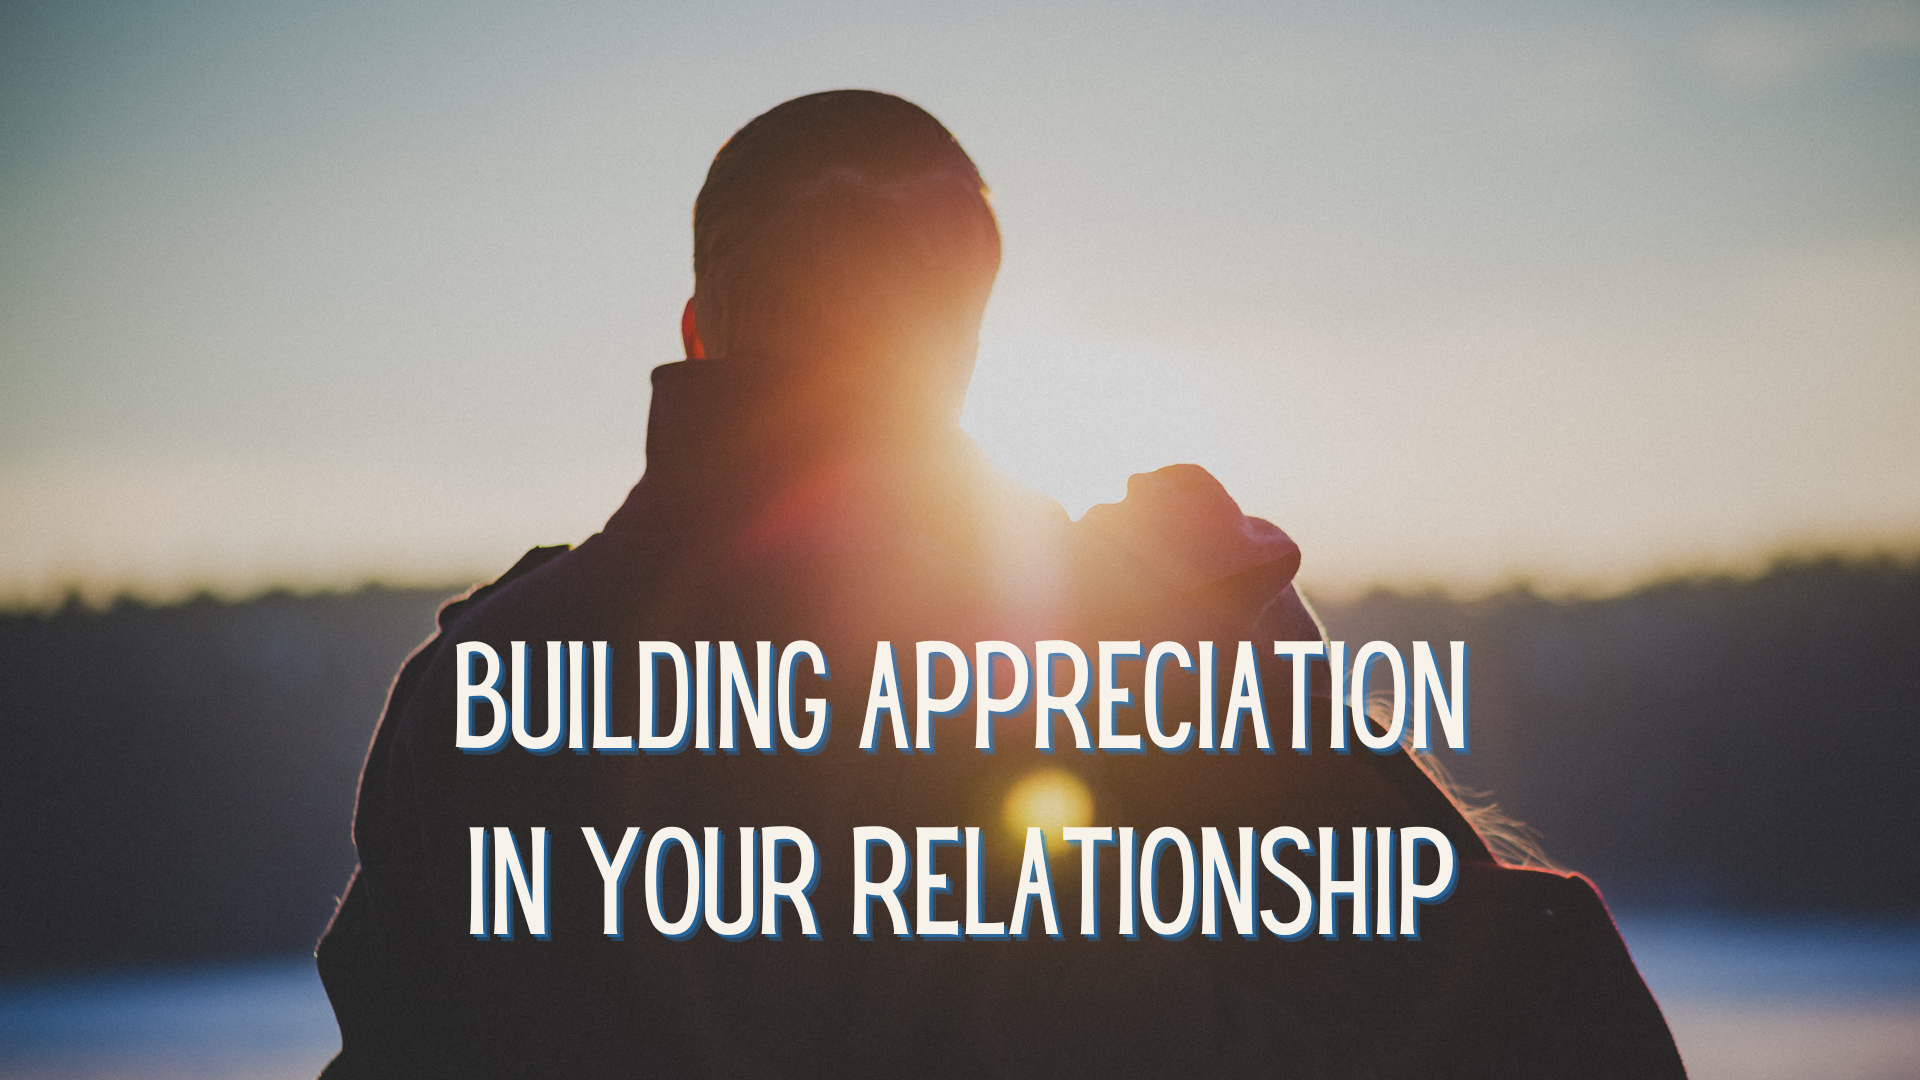 Building appreciation in your relationship